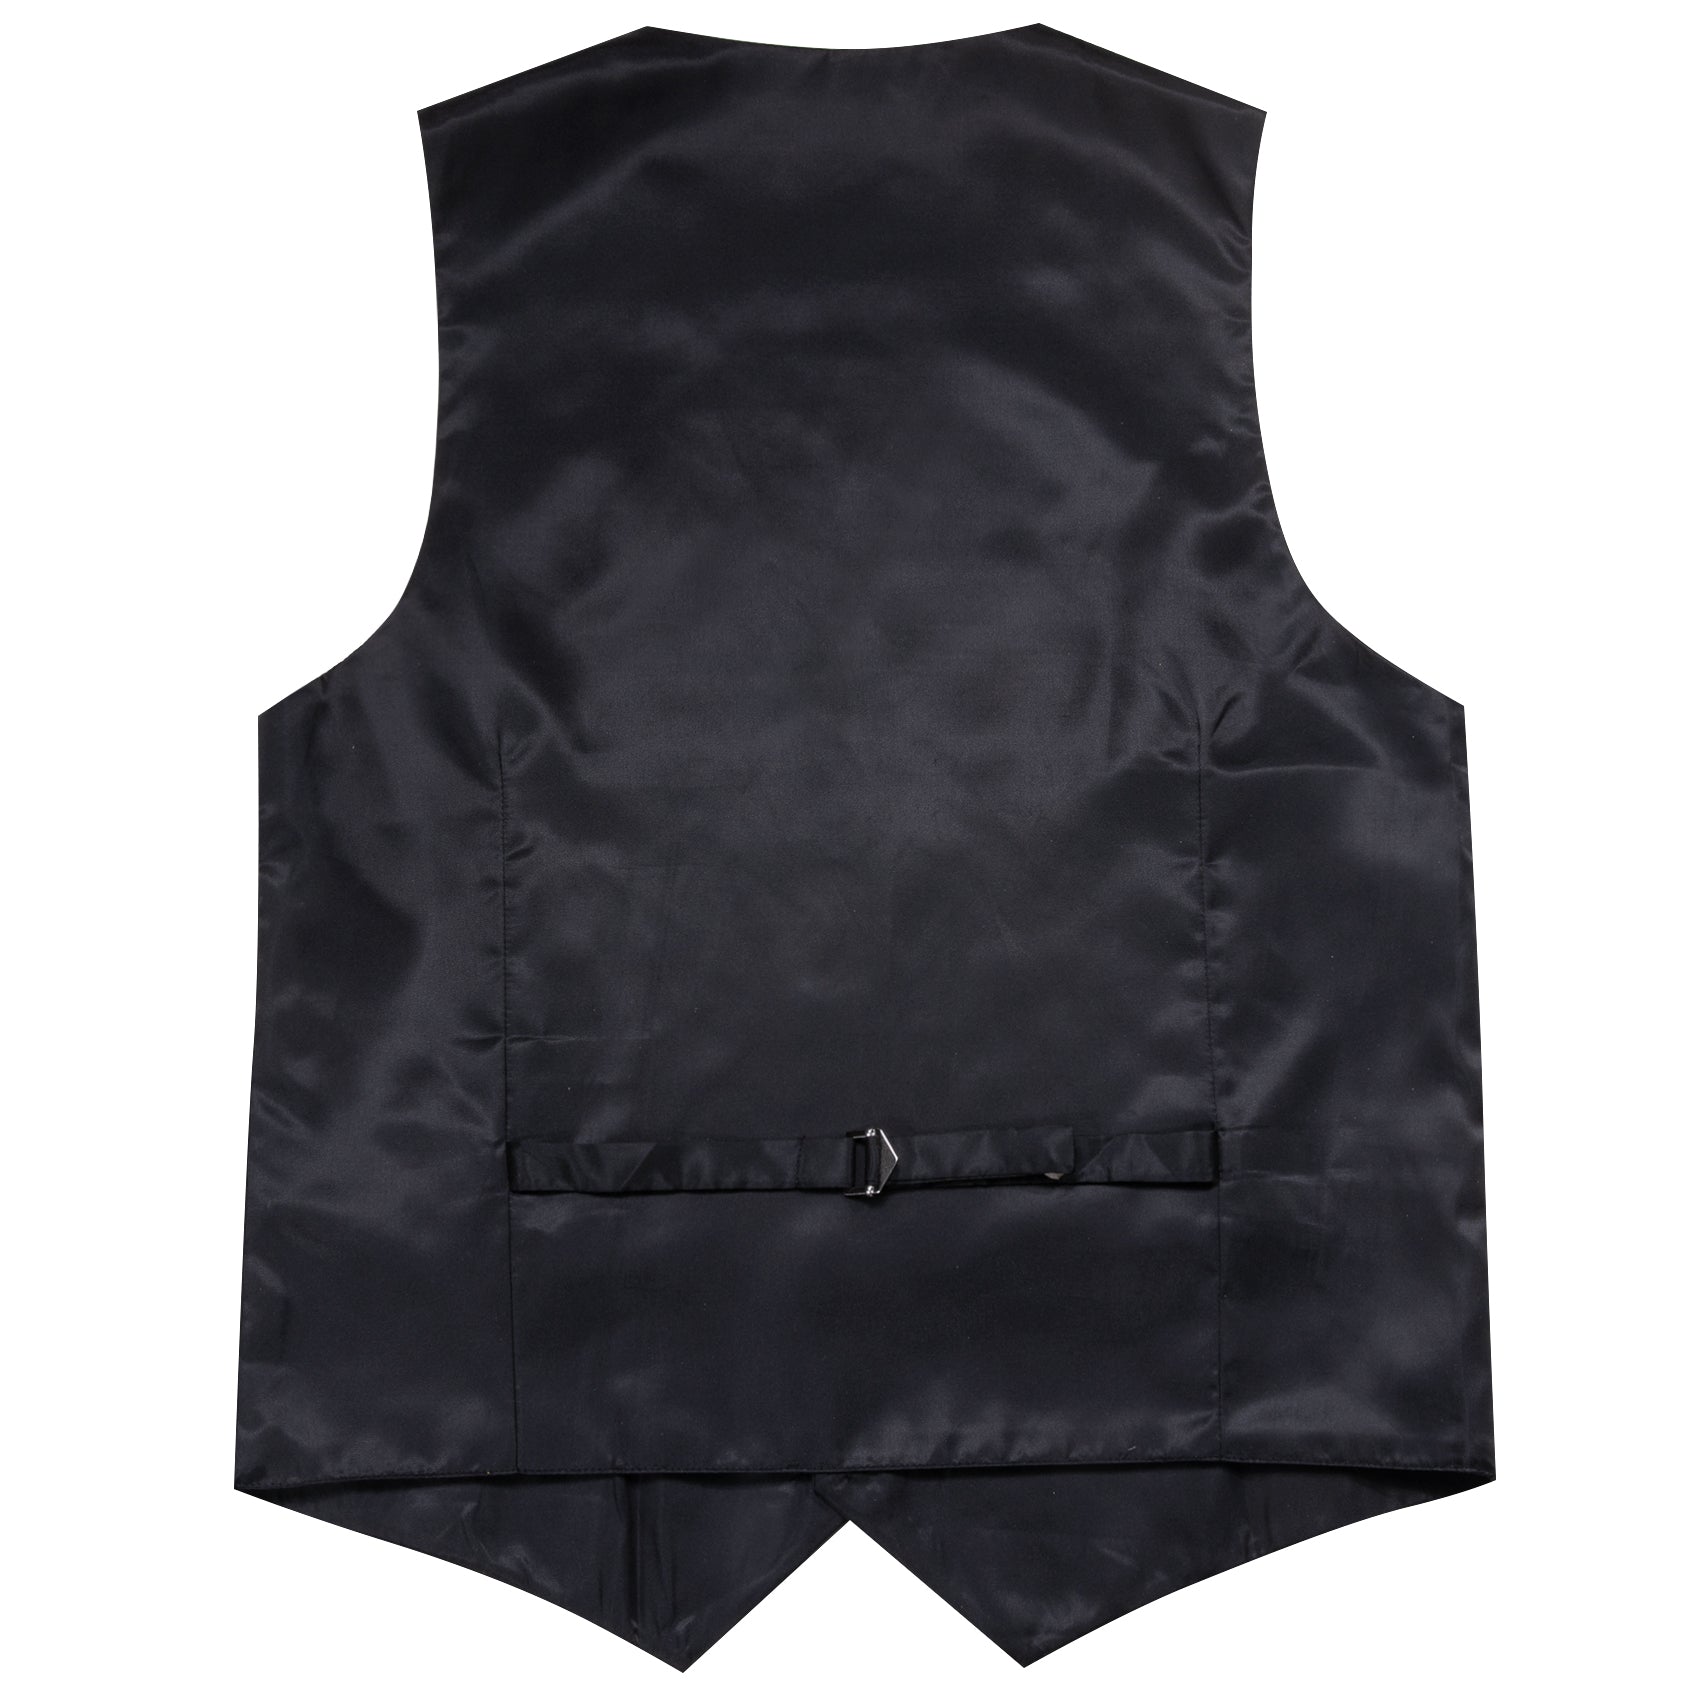 Men's Black Solid Silk V-Neck Waistcoat Vest